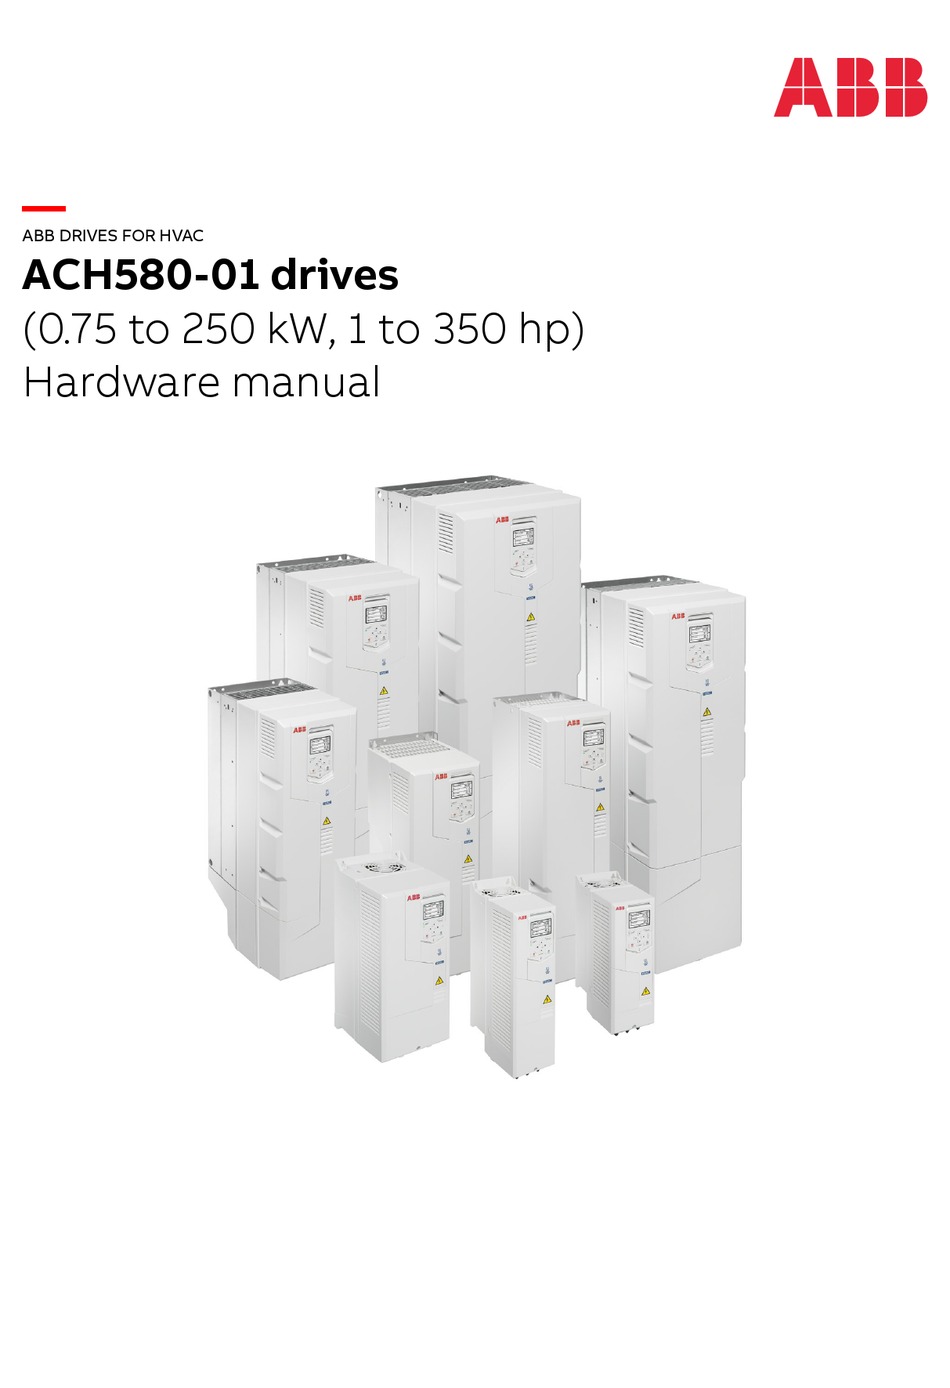 ABB ACH580-01 HARDWARE MANUAL Pdf Download | ManualsLib